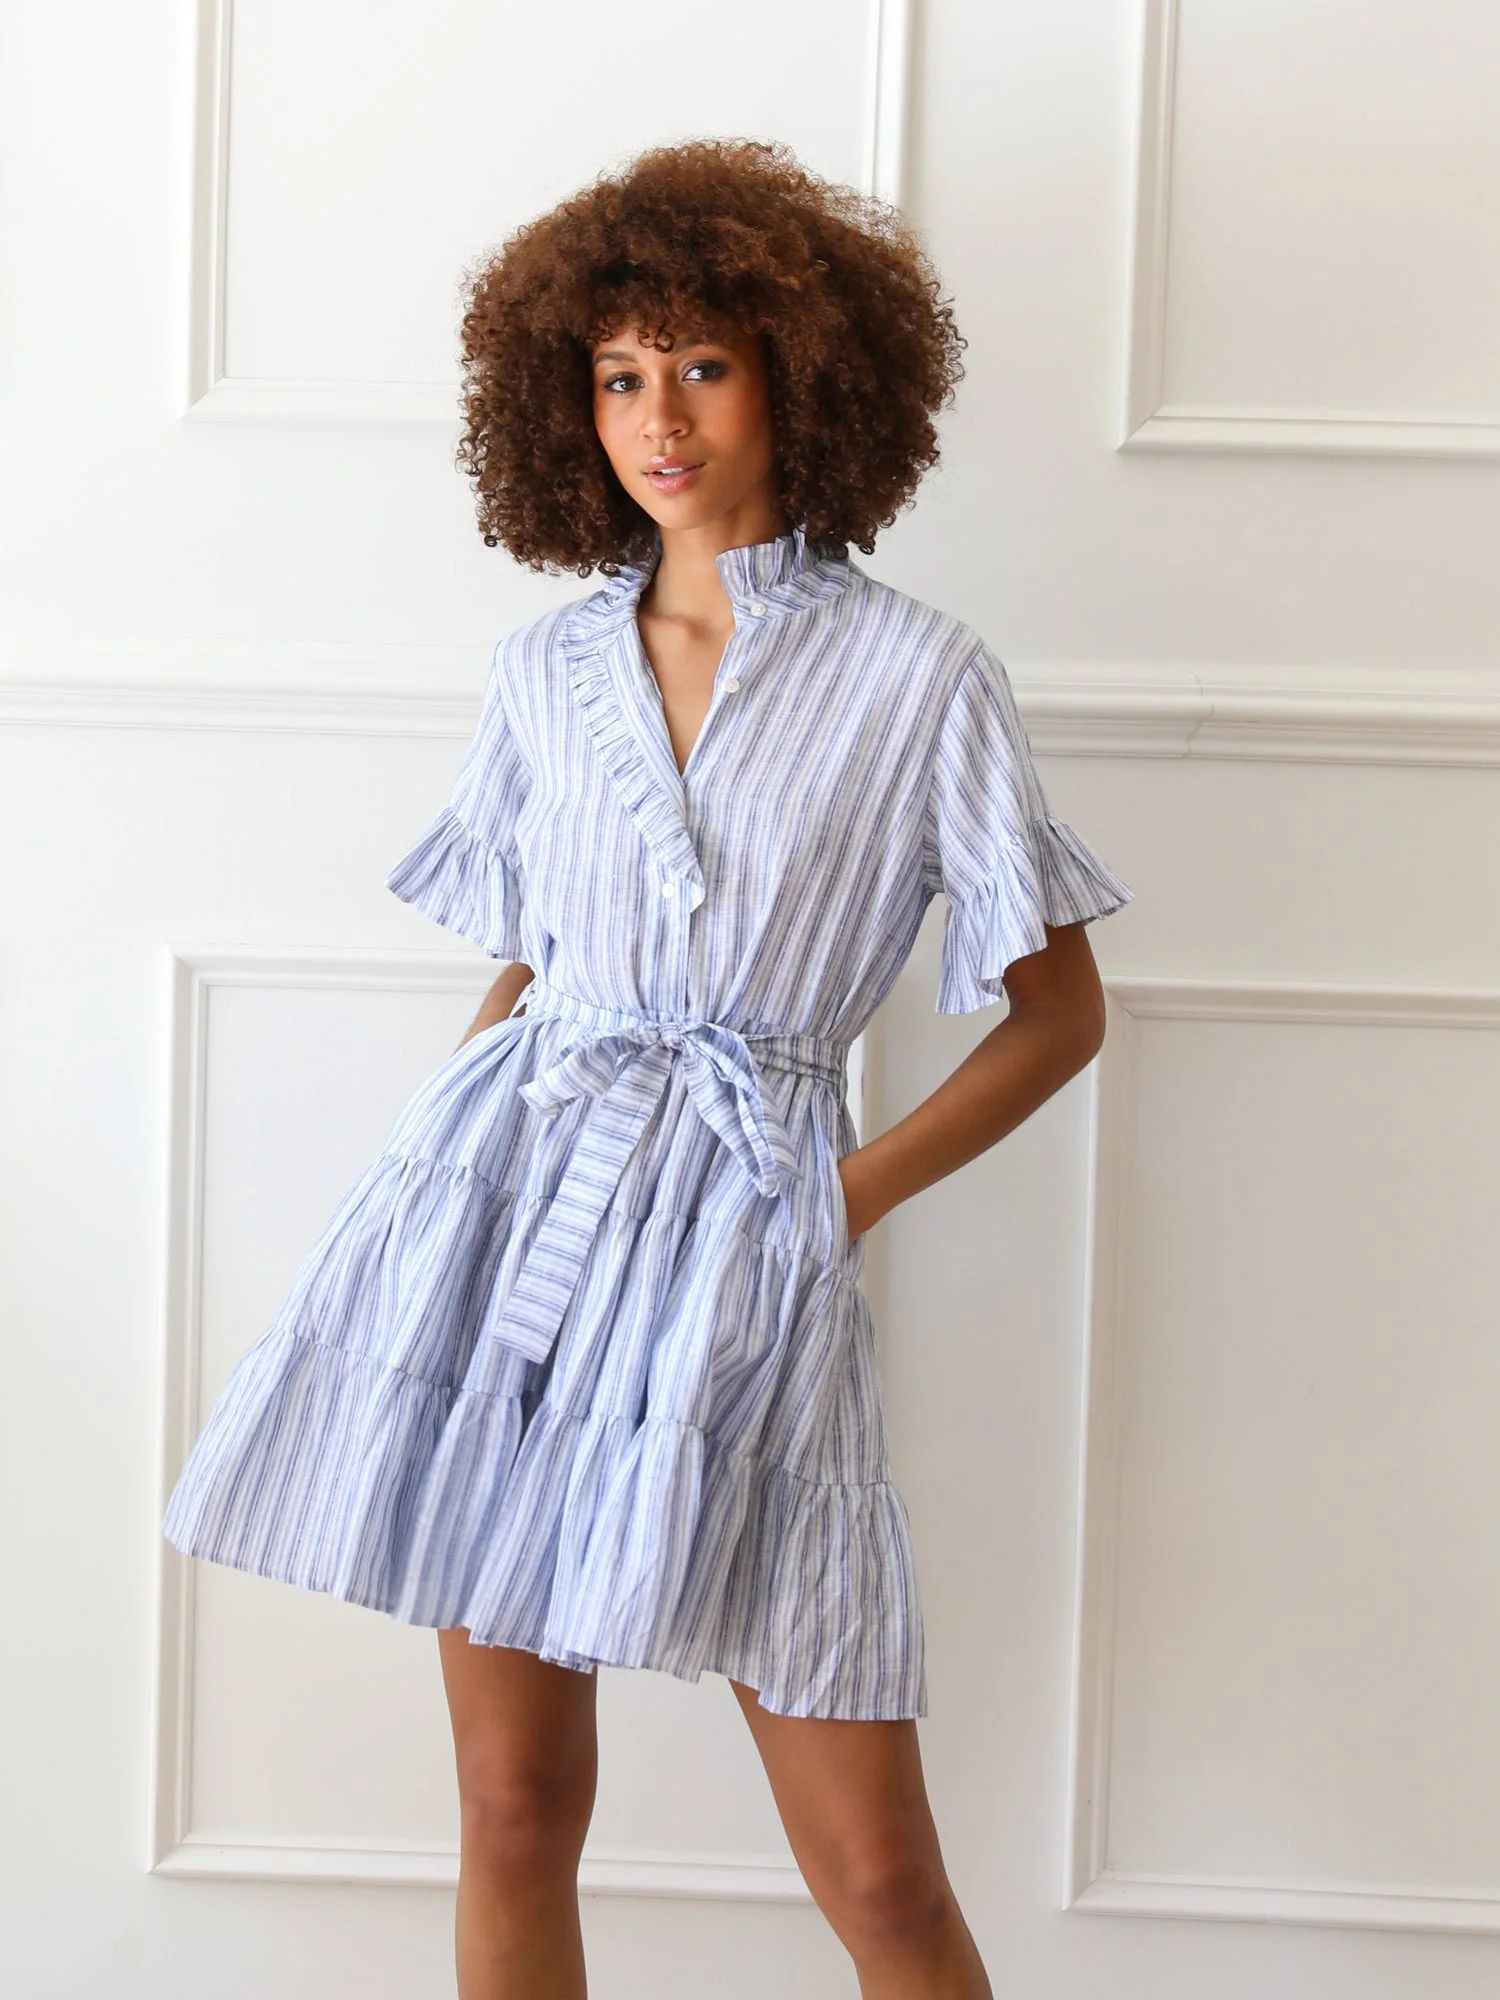 Shop Mille - Violetta Dress in Montauk Stripe Linen | Mille